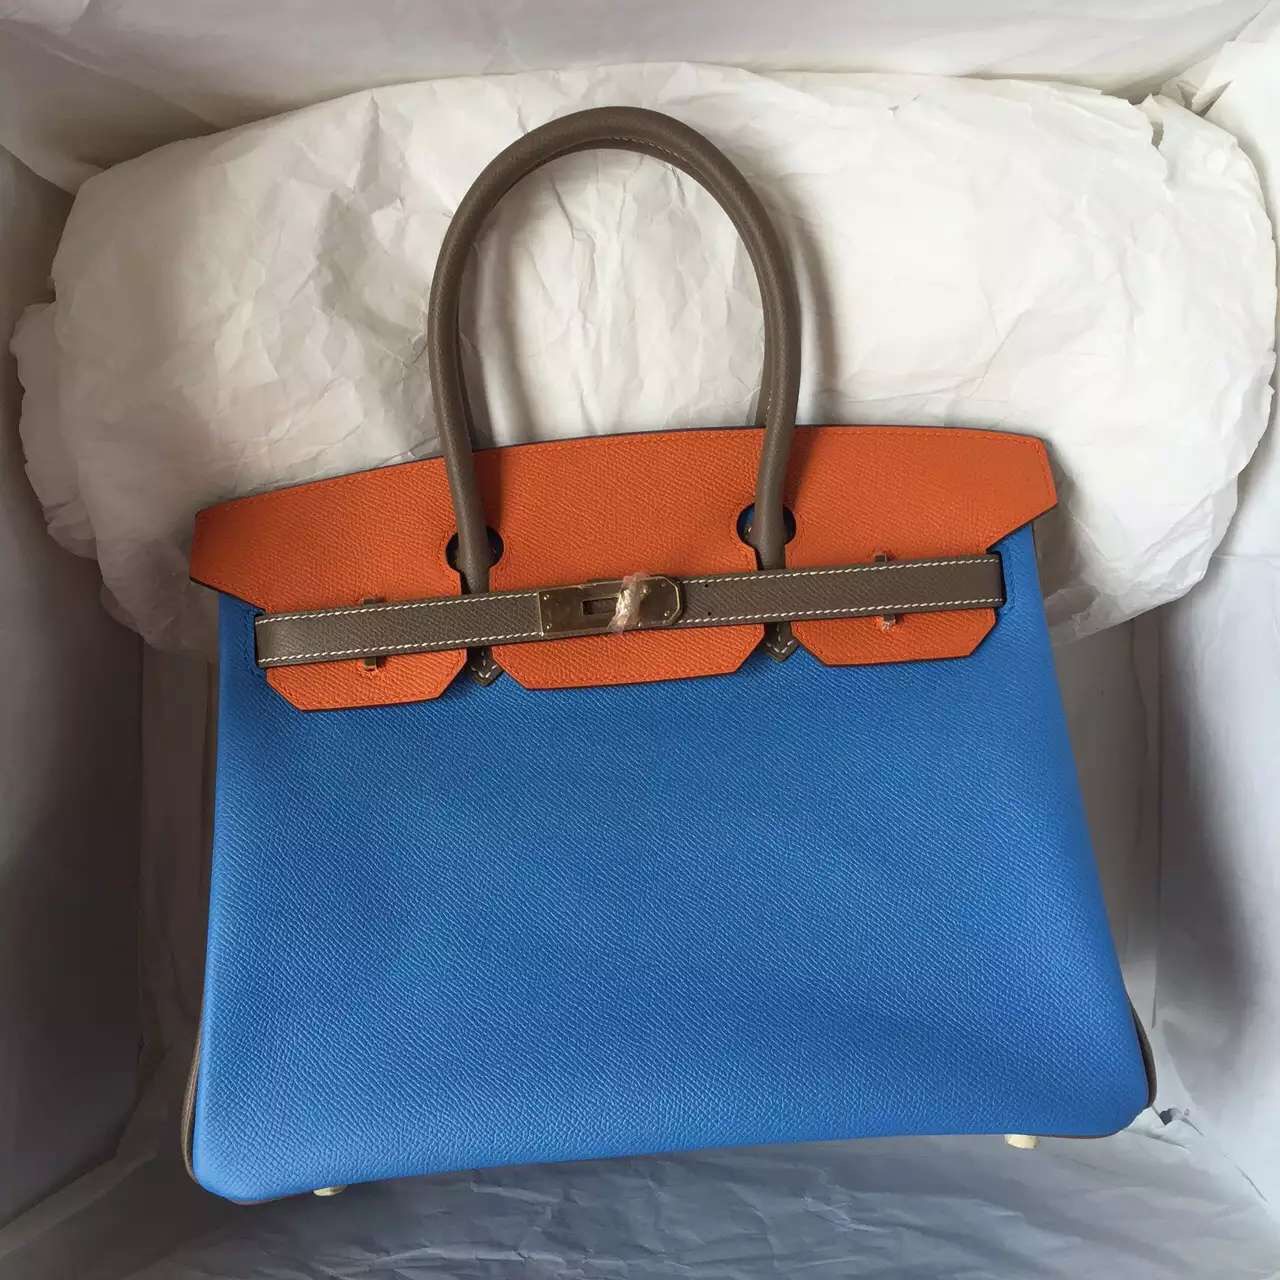 Cheap Hermes Epsom Leather Birkin Bag 30CM in 2T Blue Paradise/Etoupe Grey/Orange Color